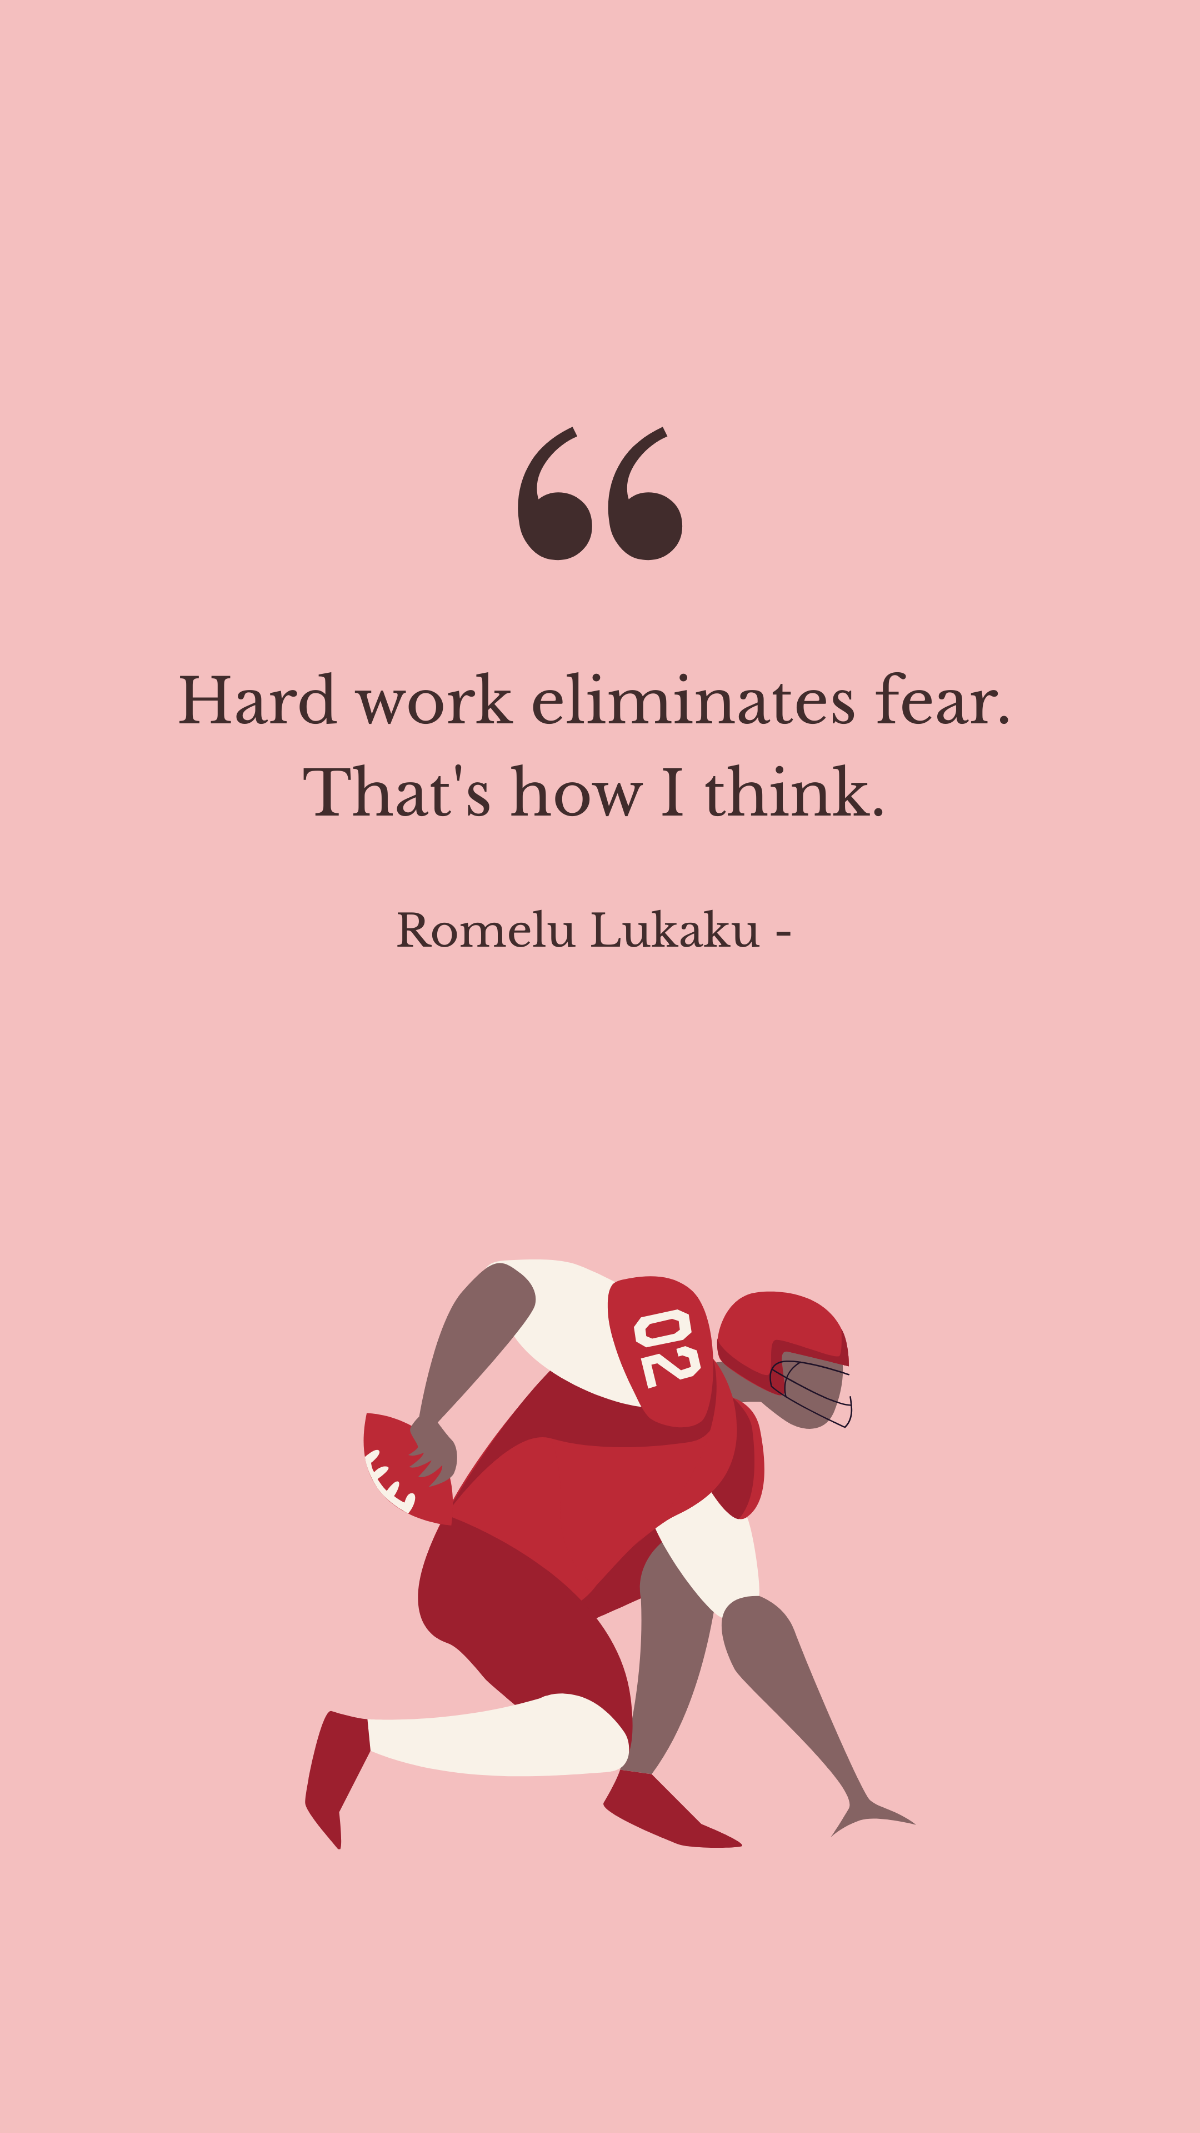 Free Romelu Lukaku - Hard work eliminates fear. That's how I think. Template